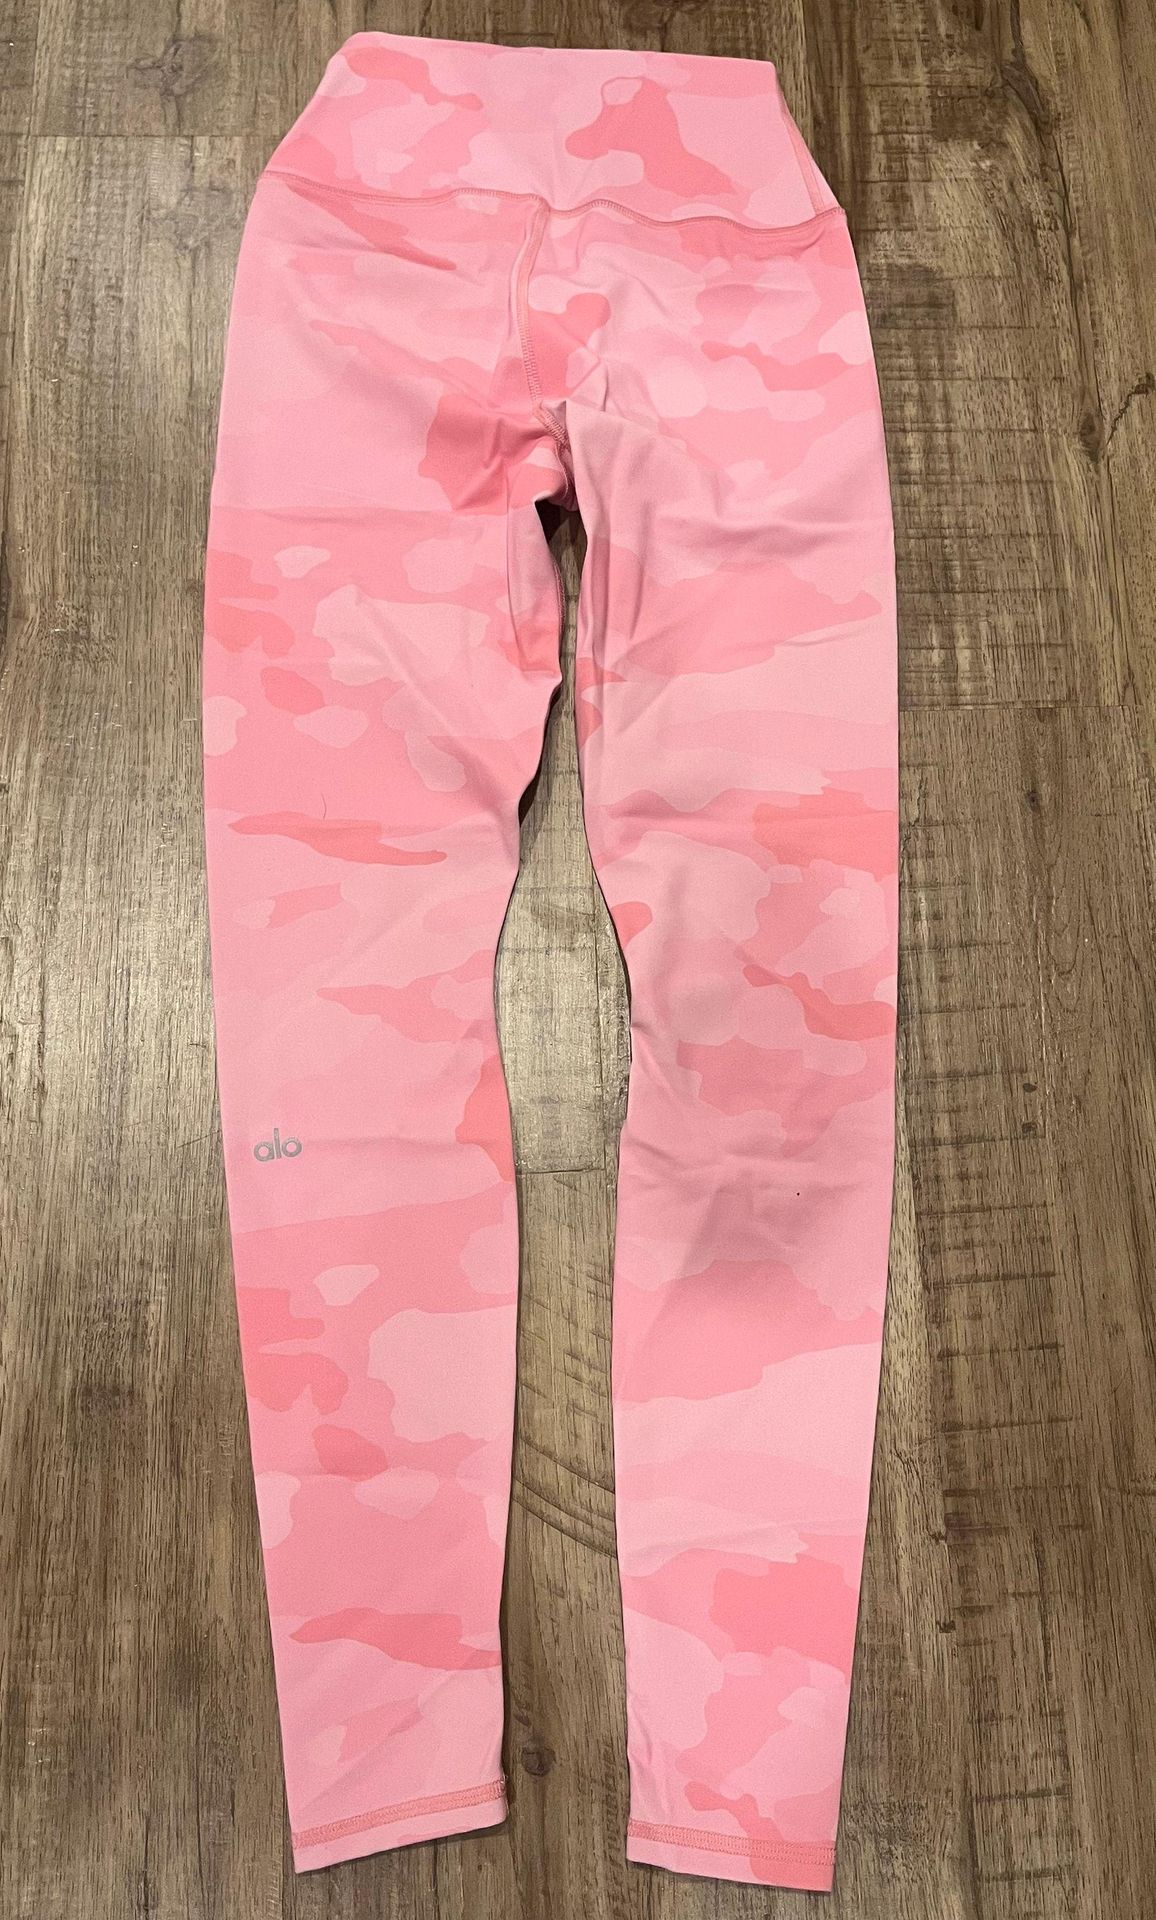 Alo Yoga High Waist Vapor Legging Pink Camouflage - $35 (72% Off